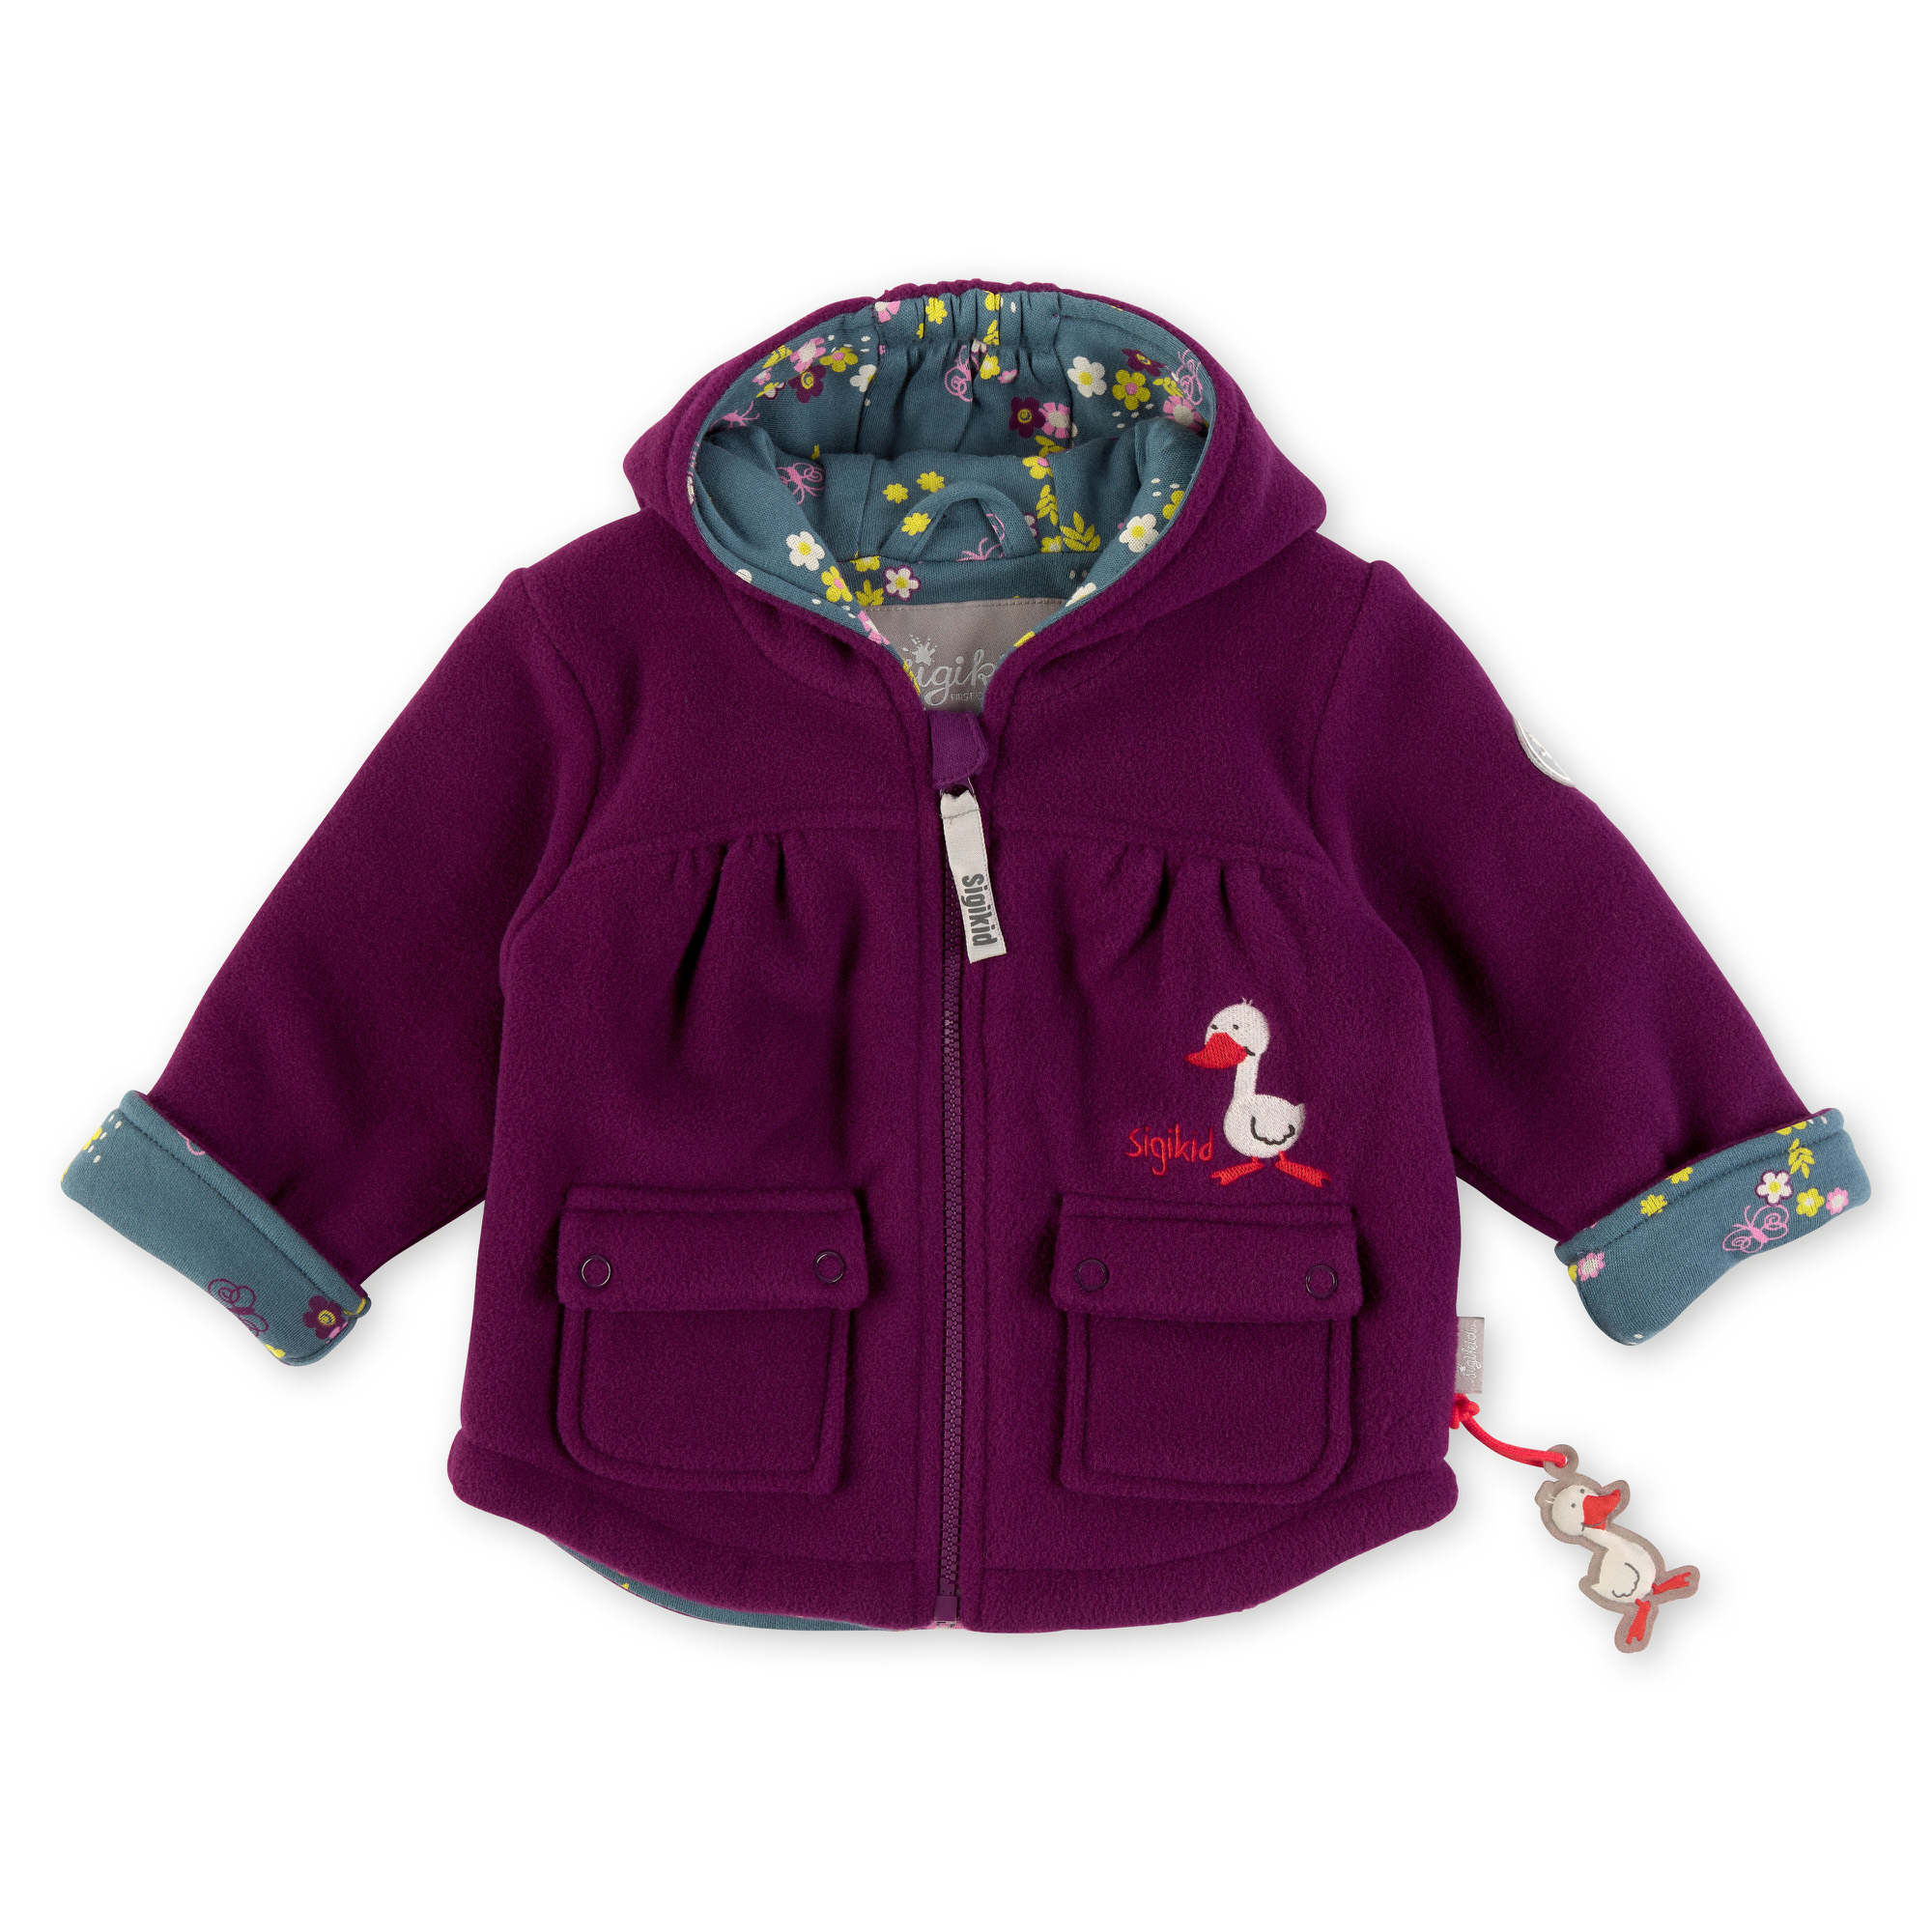 Baby & toddler fleece jacket duckling, hooded, lined